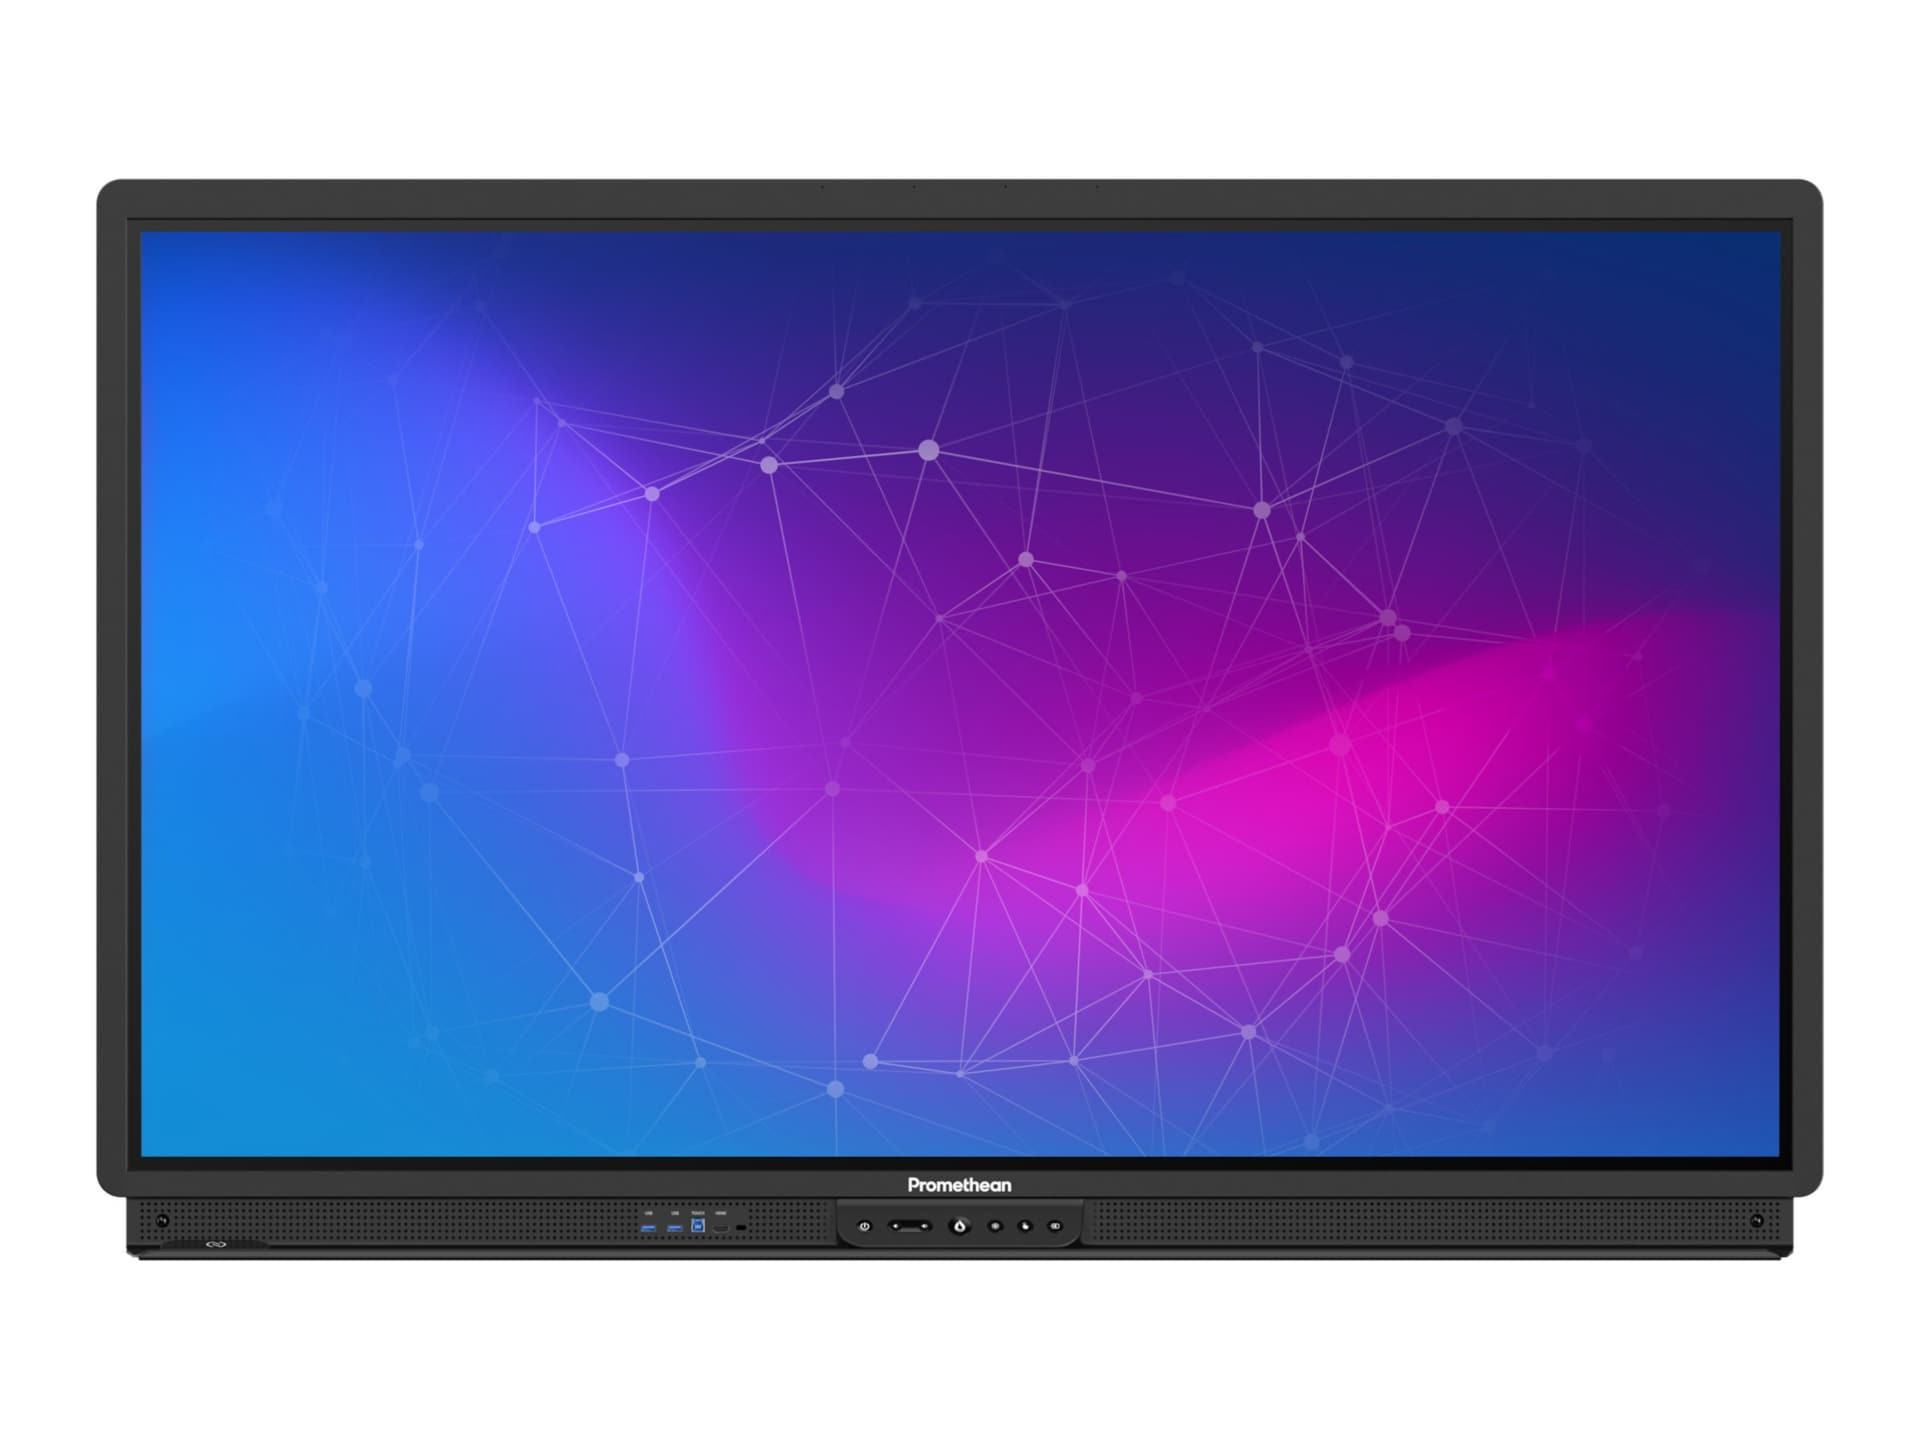 Promethean ActivPanel 9 Premium 65" LED-backlit LCD display - 4K - for interactive communication